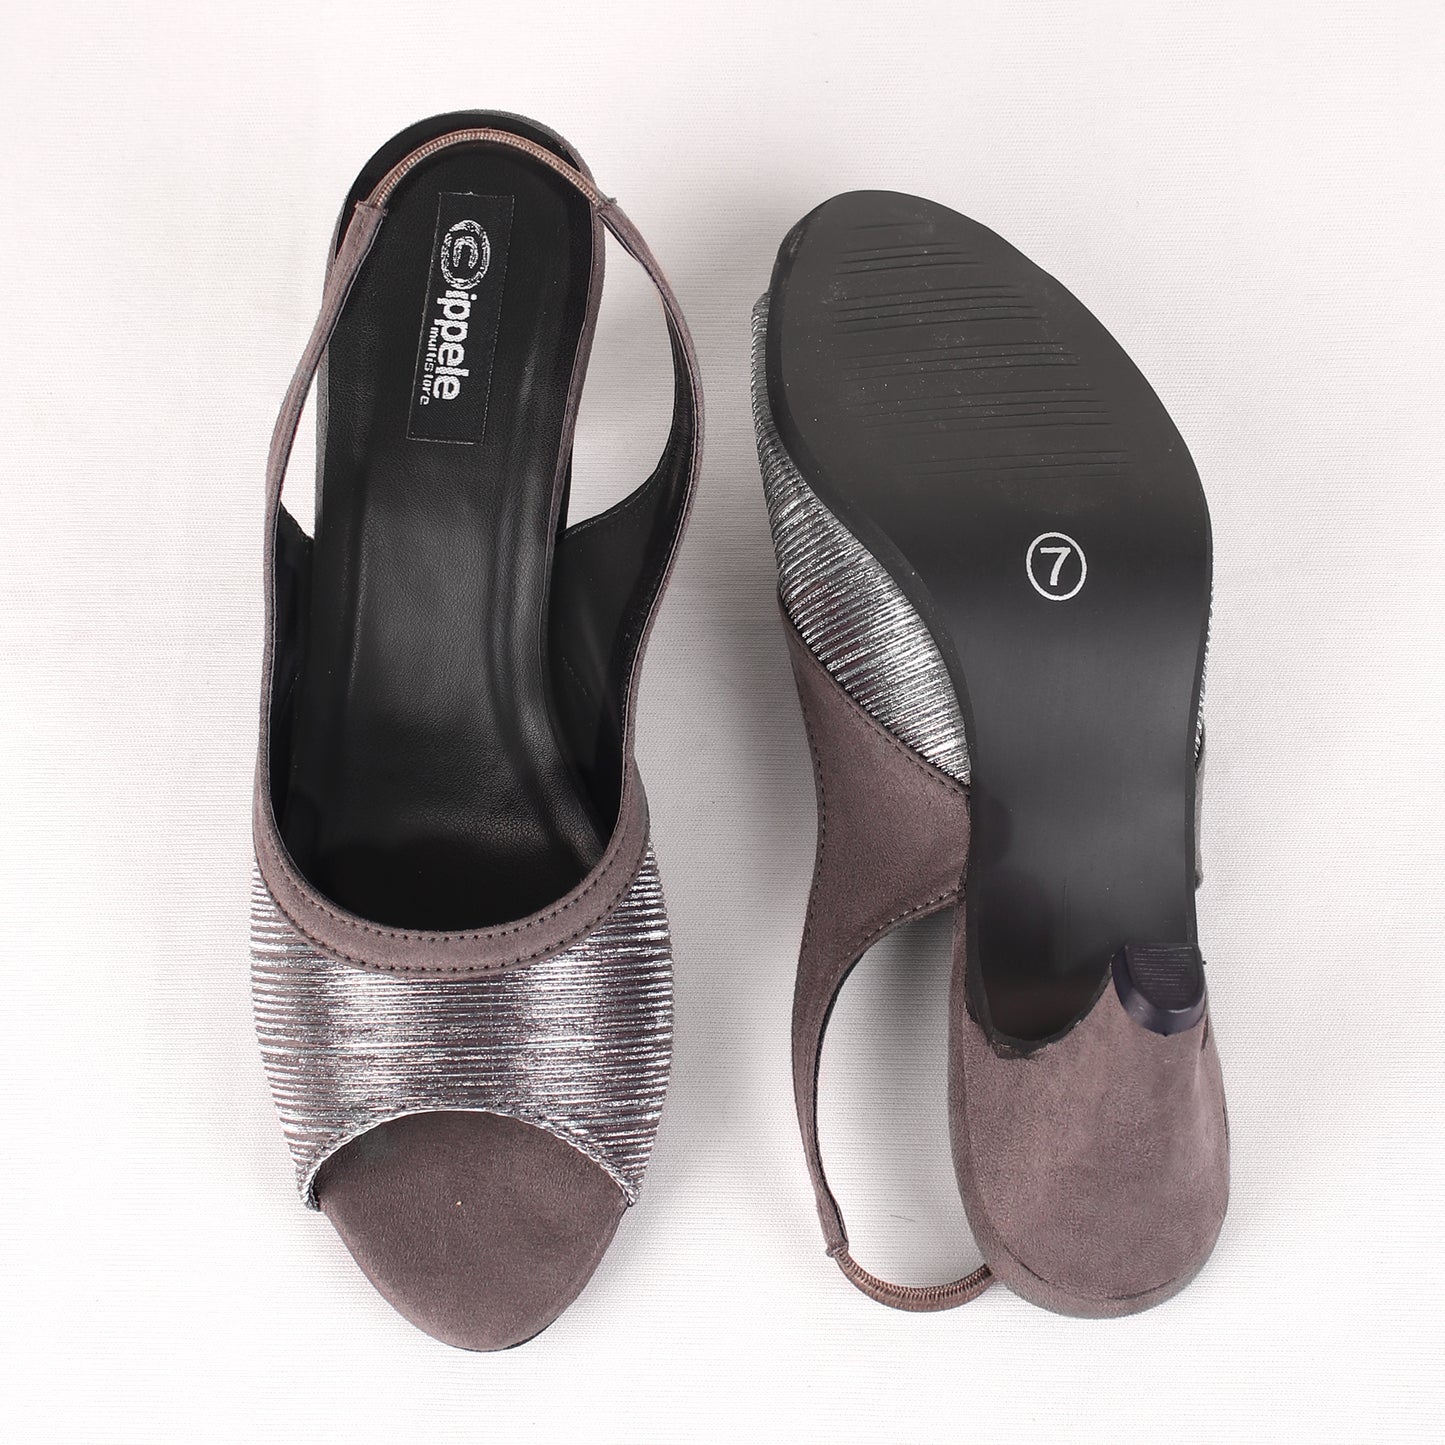 Foot Wear,The Artistic Scrub Heel in Grey - Cippele Multi Store